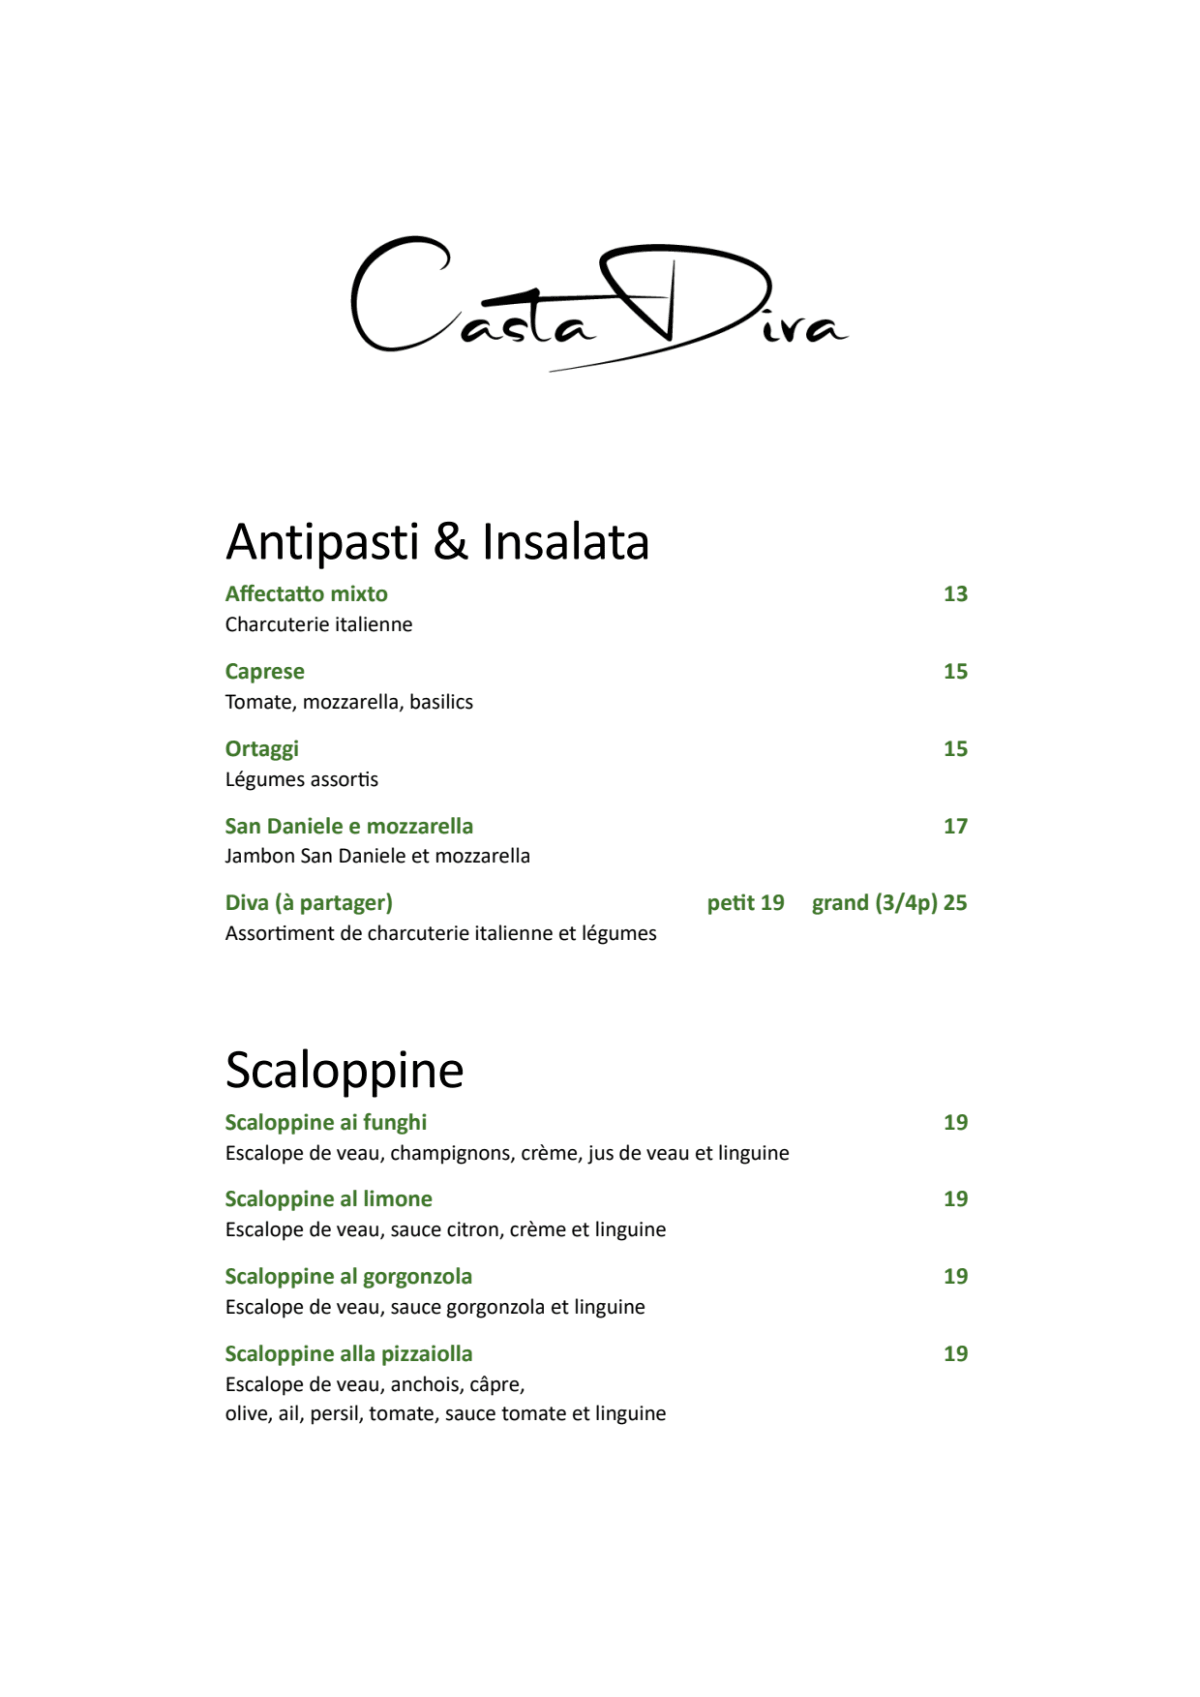 Casta Diva menu